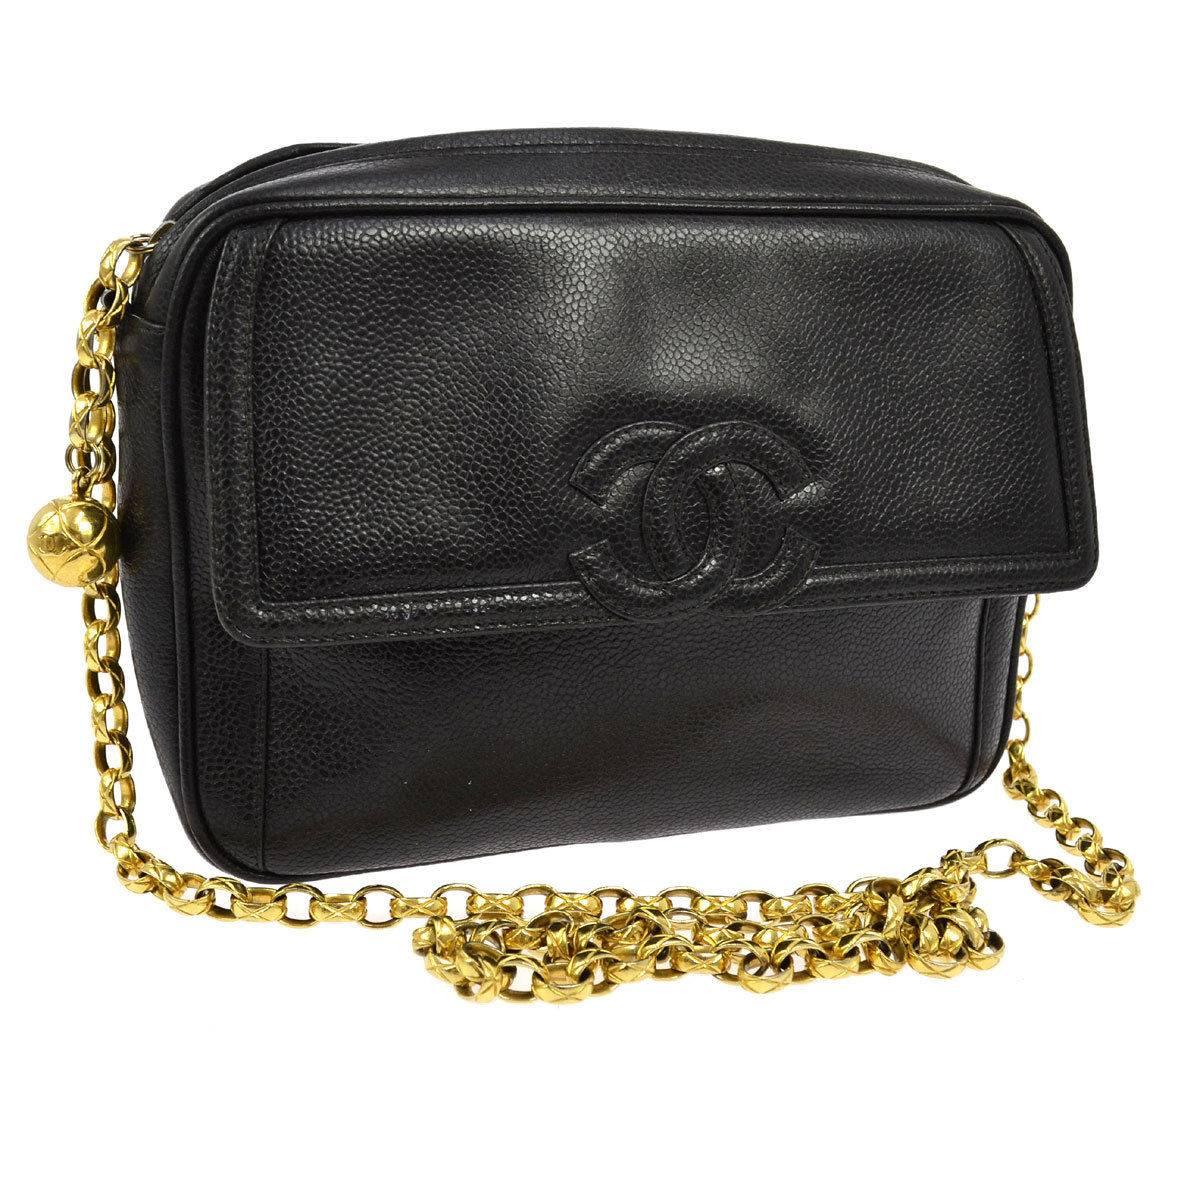 Chanel Black Caviar Leather Gold Chain Link Evening Camera Shoulder Bag